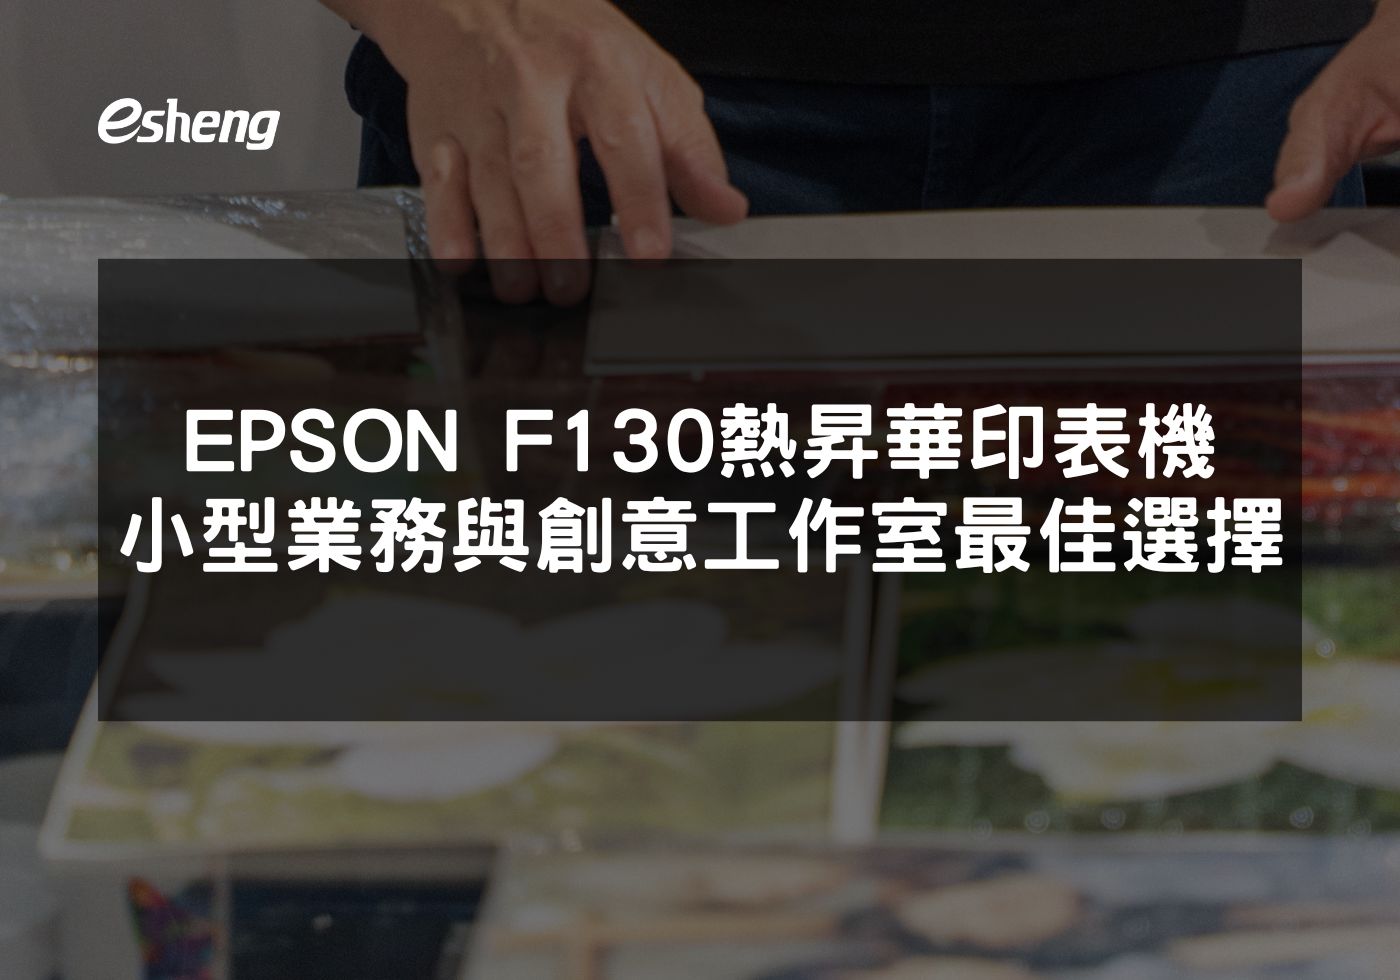 EPSON F130熱昇華印表機高效率與多功能性完美結合